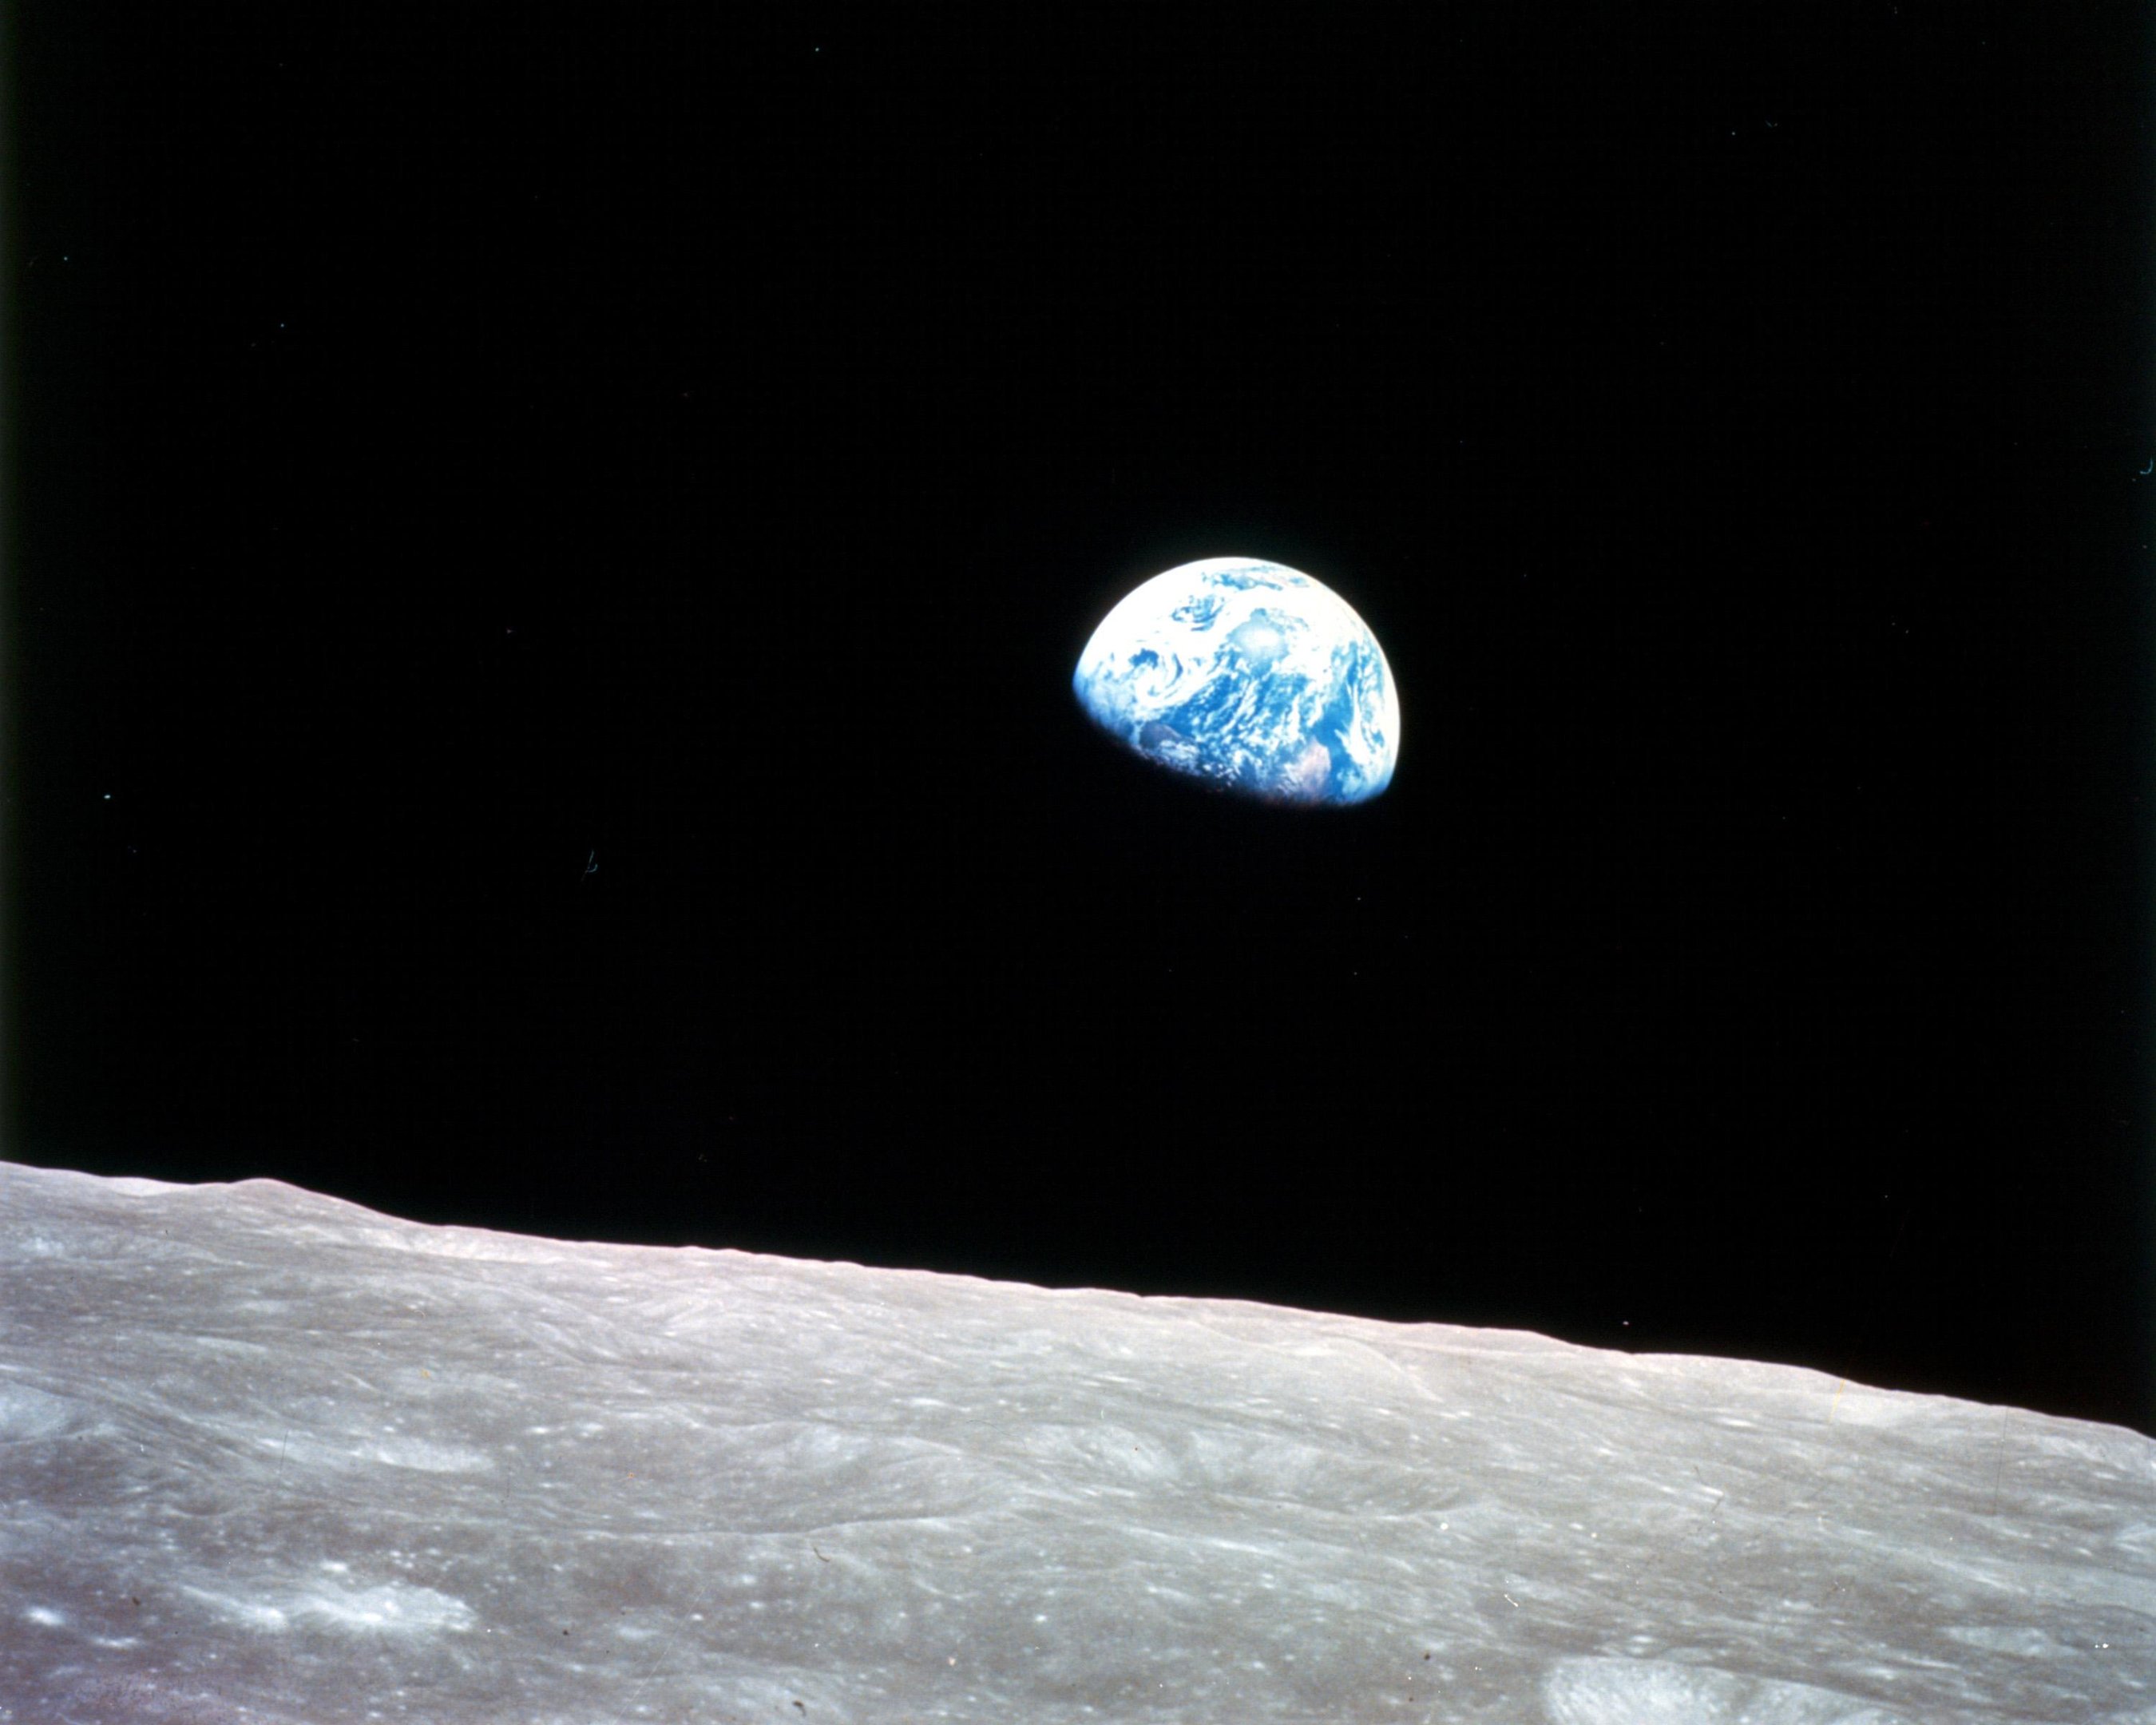 Terra nascendo vista da Lua. Foto tirada durante a missão Apollo 8.